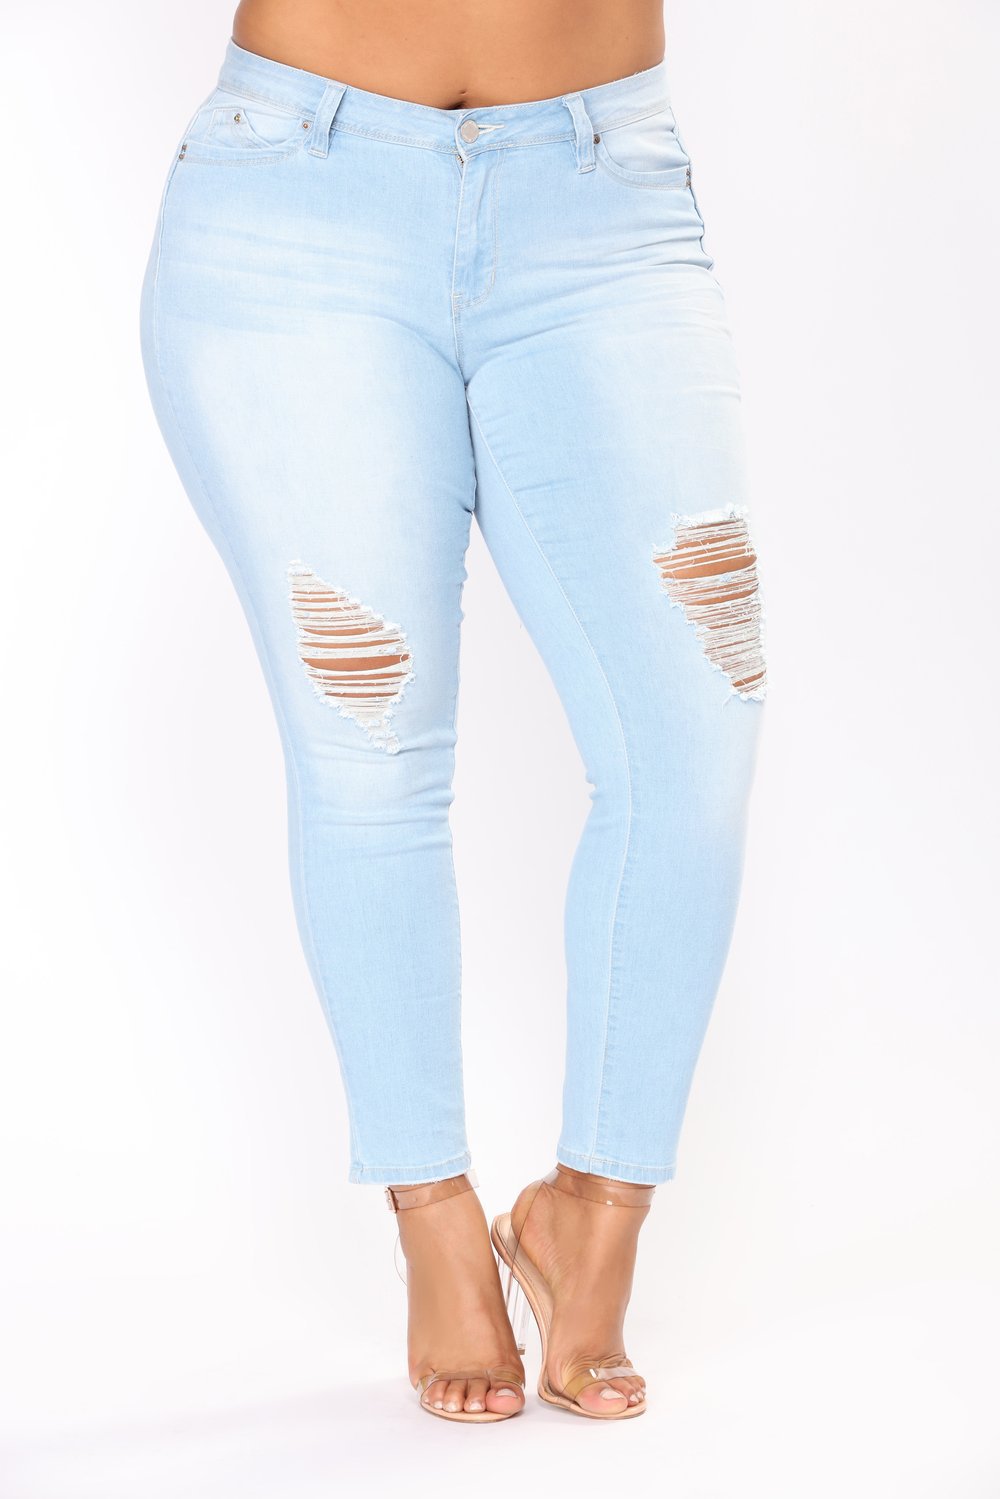 Elastic embroidered denim ladies feet pants jeans